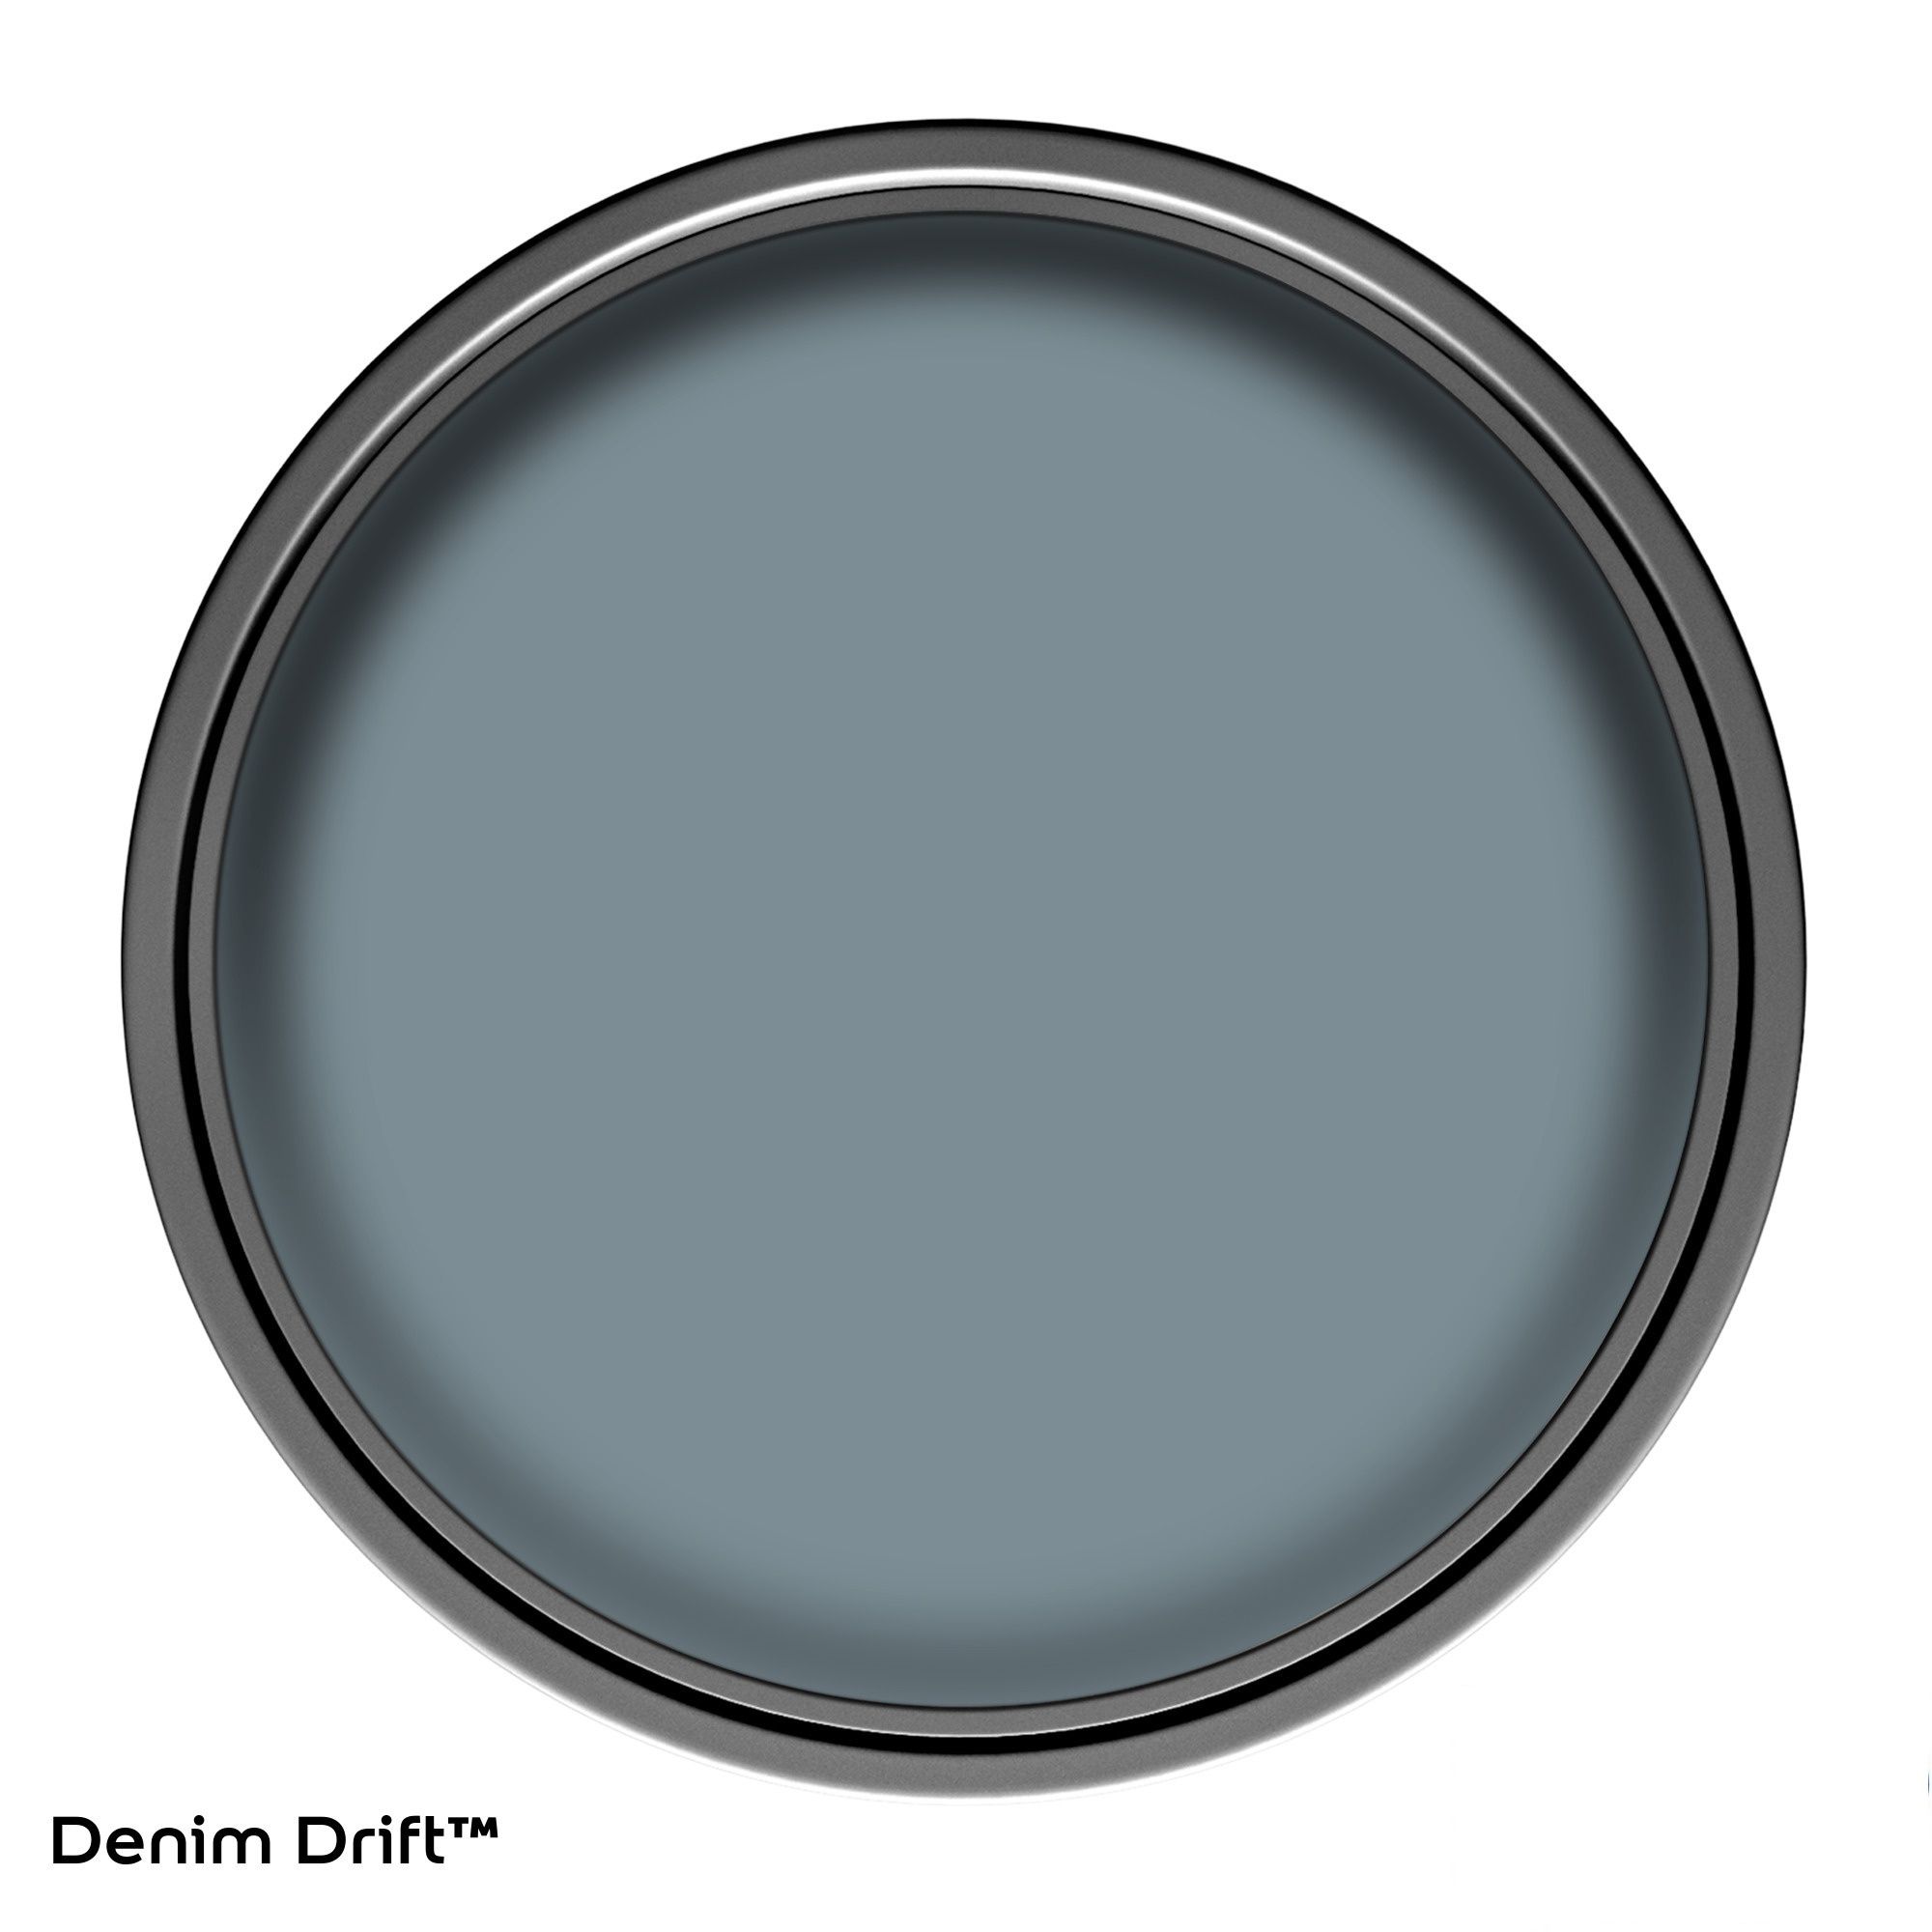 Dulux Easycare Bathroom Denim drift Soft sheen Emulsion paint, 2.5L